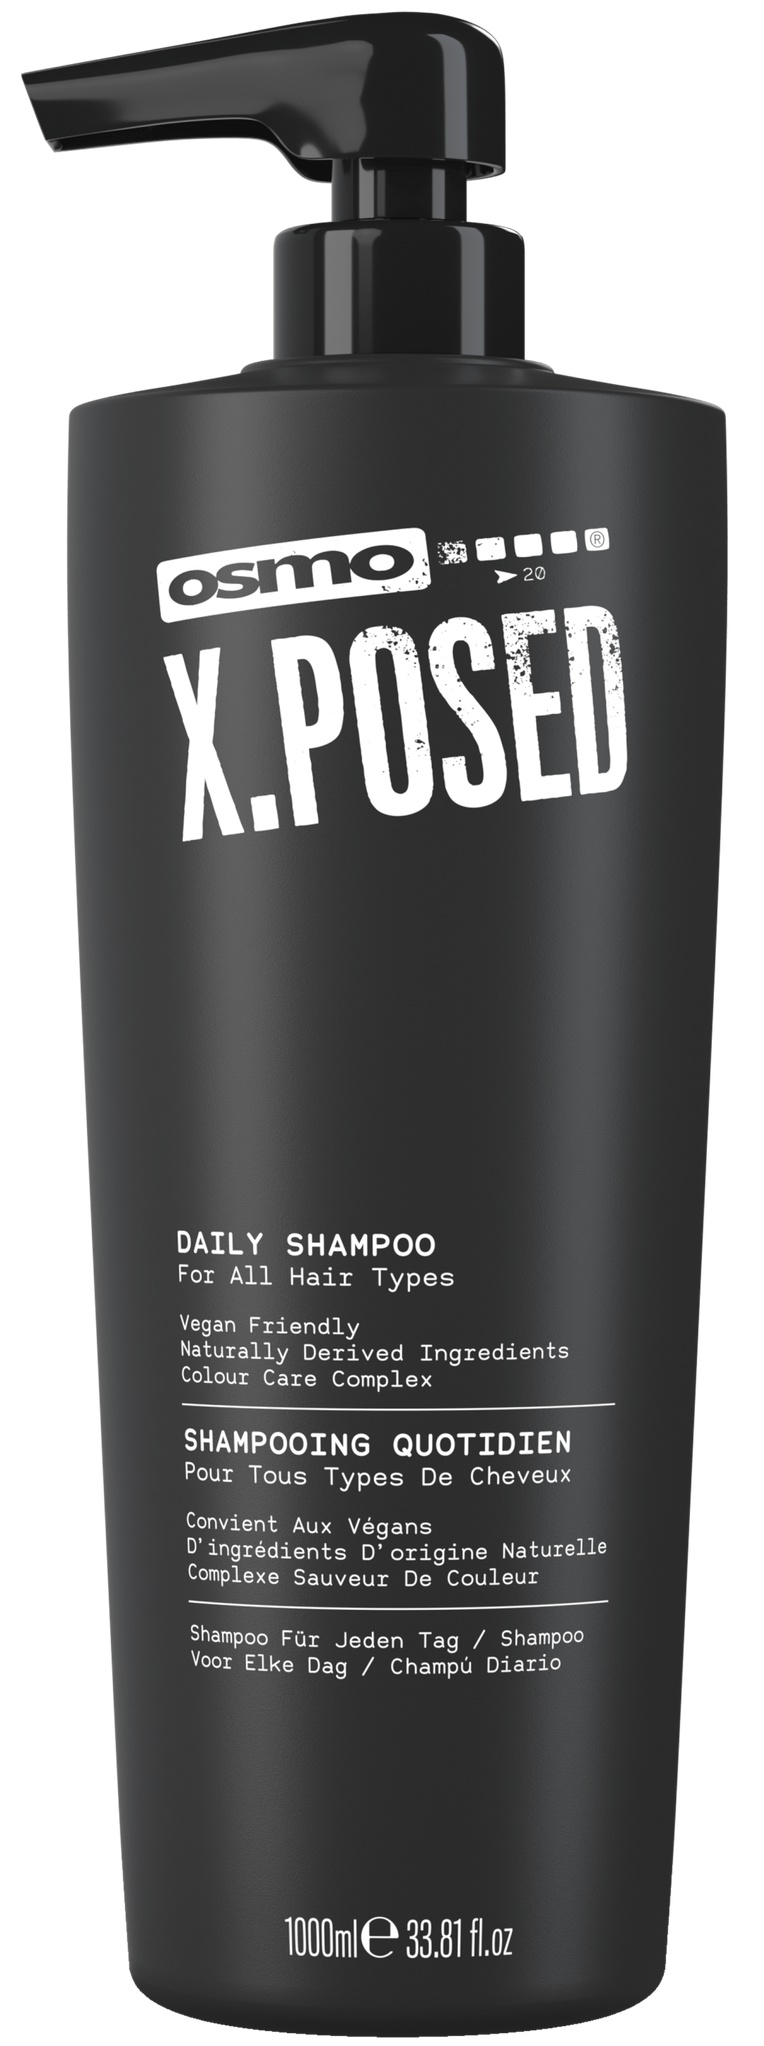 OSMO X.posed Daily Shampoo